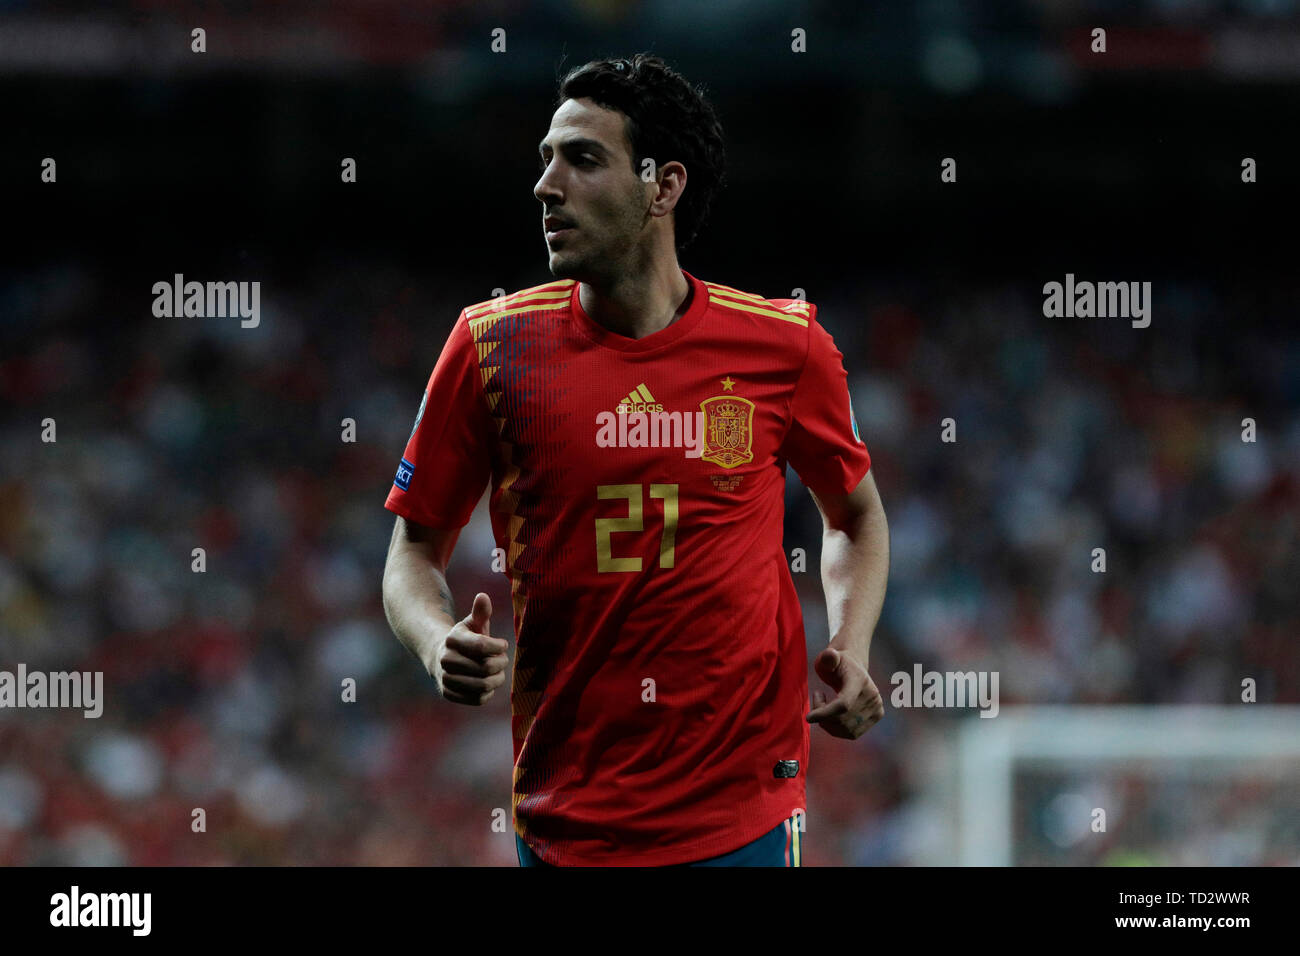 Spagna national team player Daniel Parejo visto durante UEFA EURO 2020 Qualifier match tra la Spagna e la Svezia a Santiago Bernabeu Stadium in Madrid. Punteggio finale: Spagna 3 - Svezia 0 Foto Stock